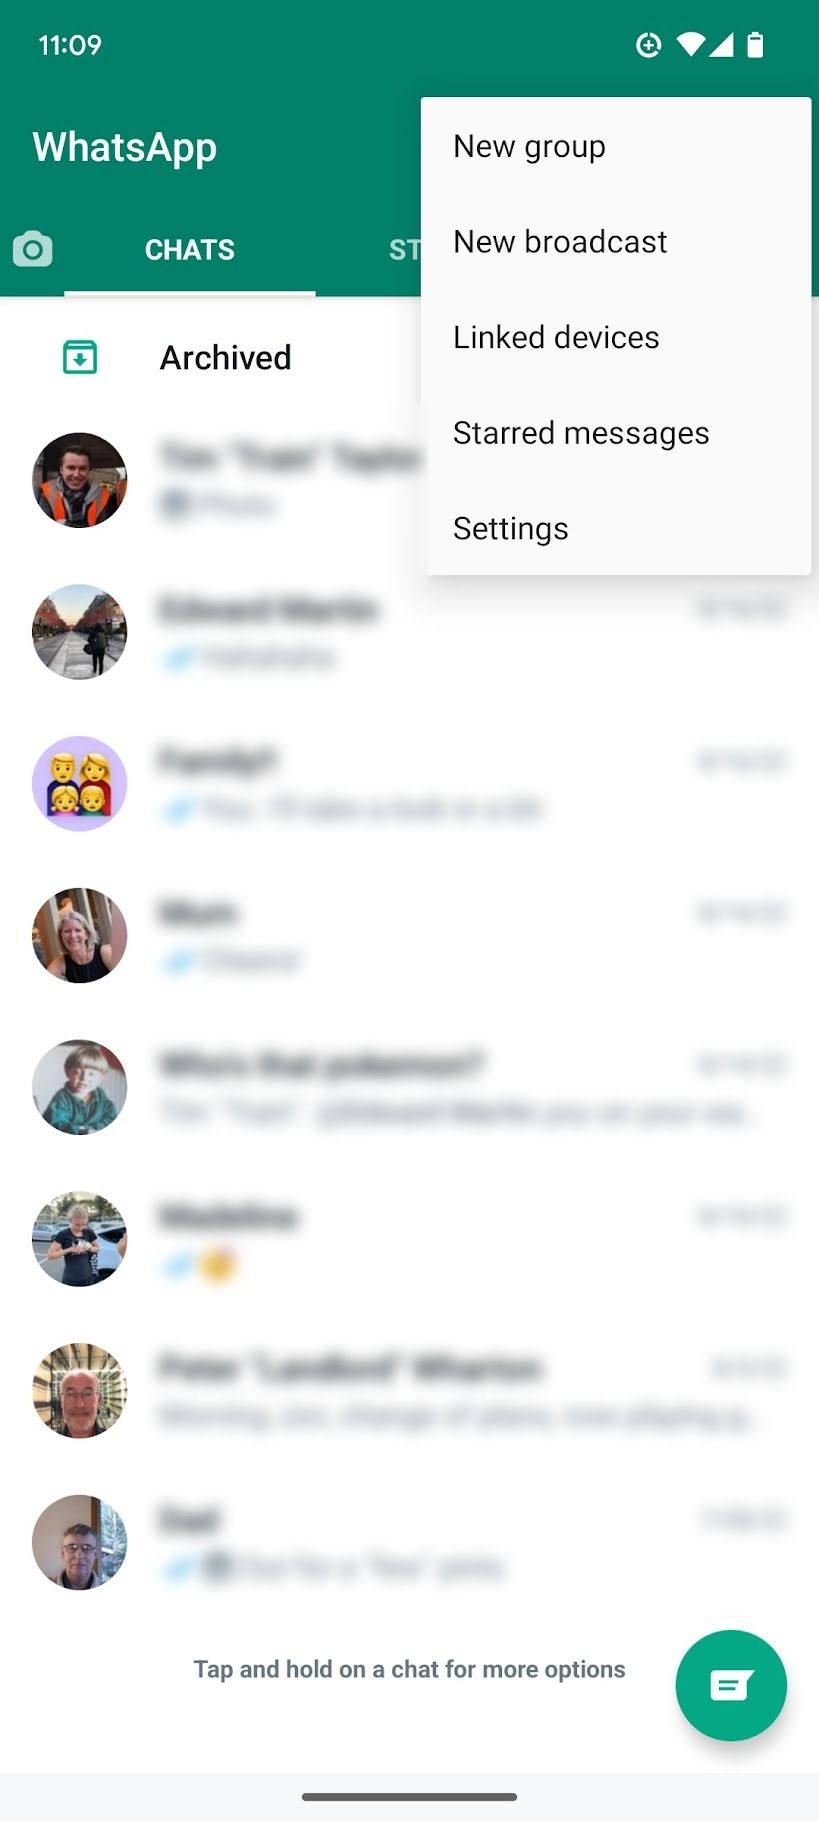 WhatsApp home menu and settings